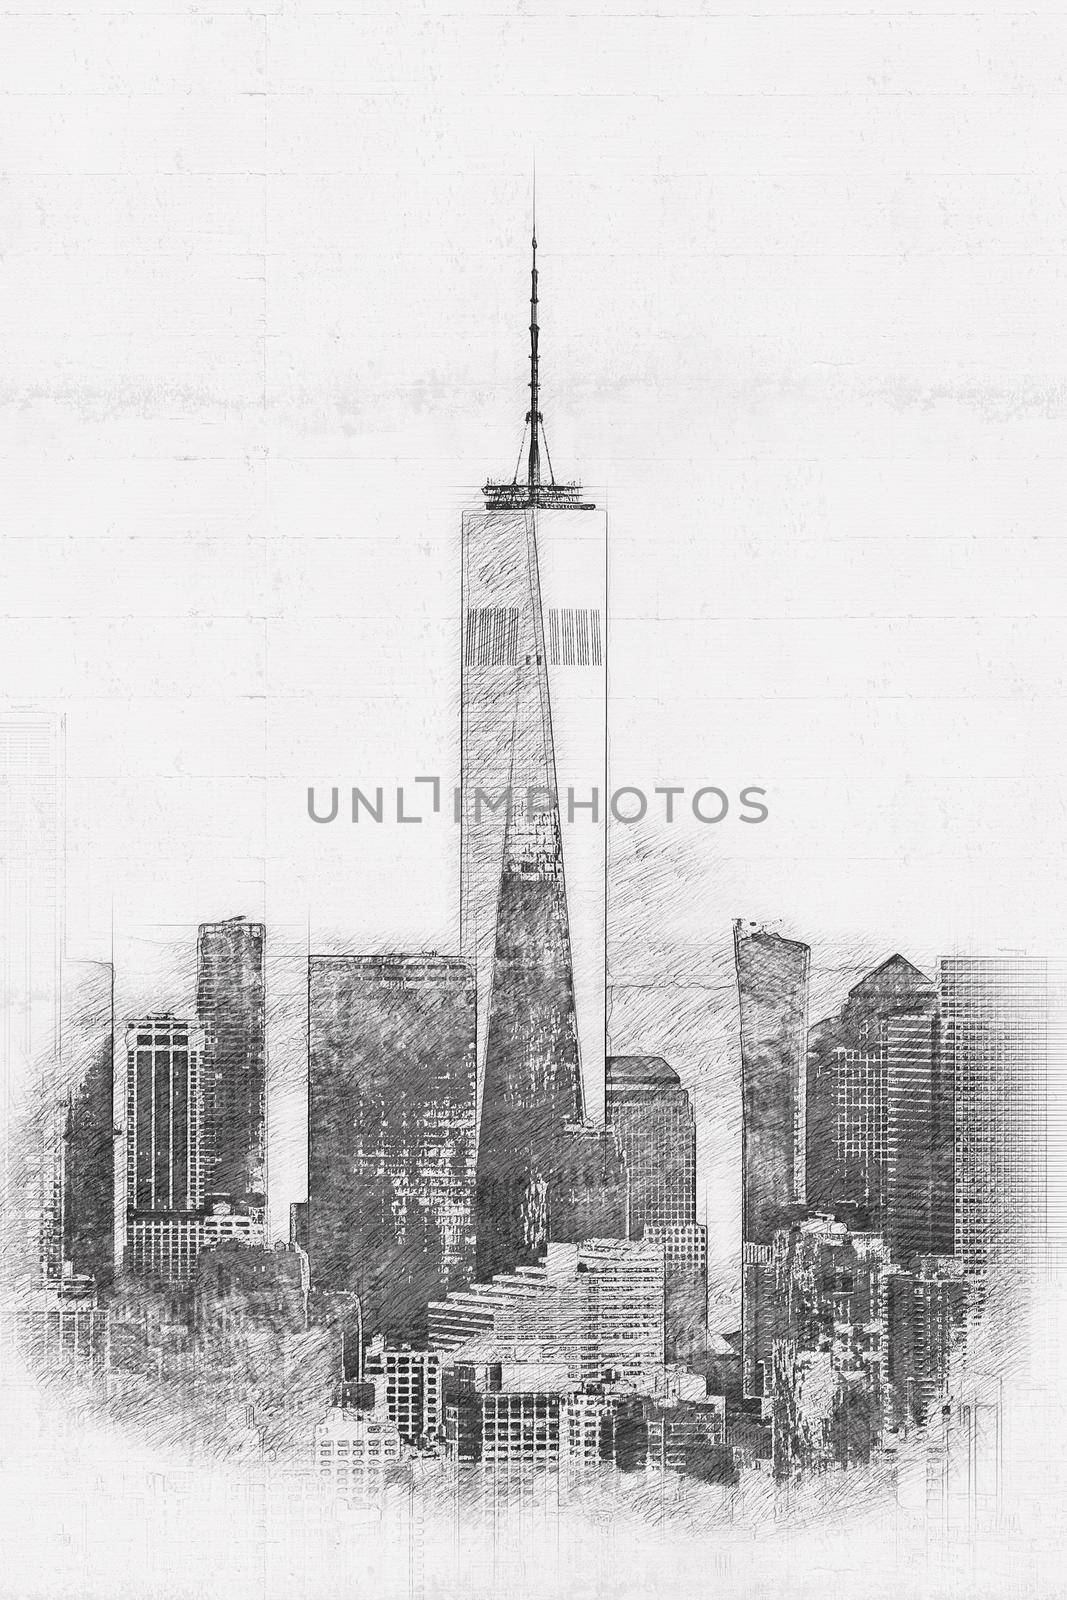 New York City skyline, a hand drawn style pencil sketch